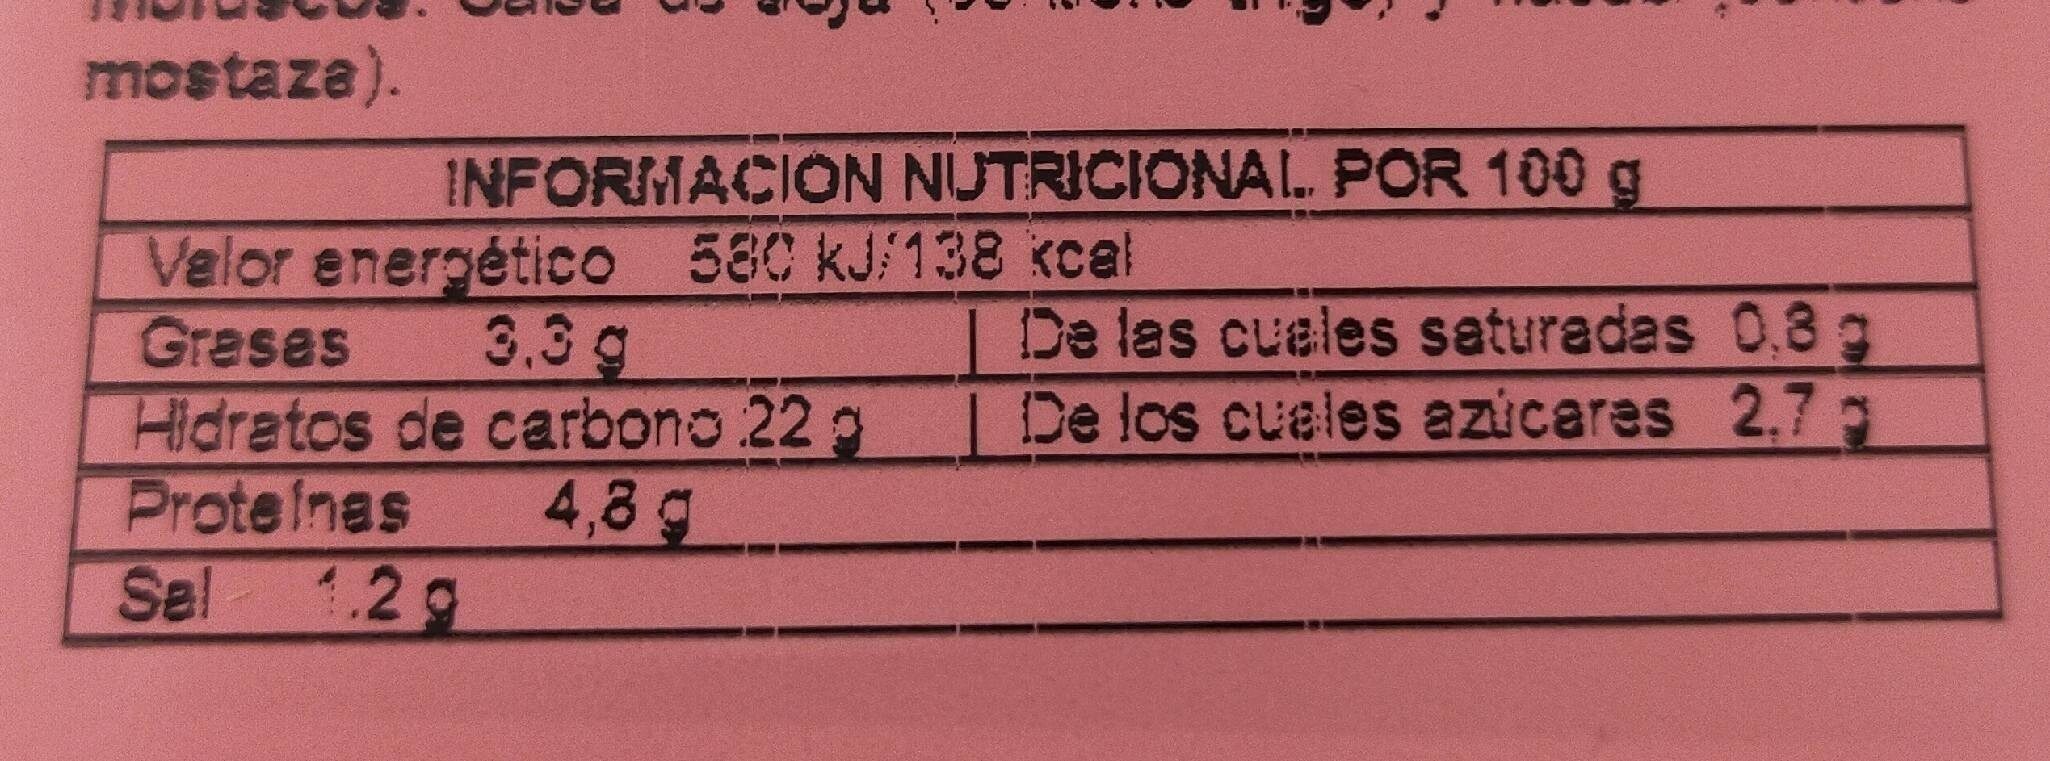 Izumi box - Información nutricional